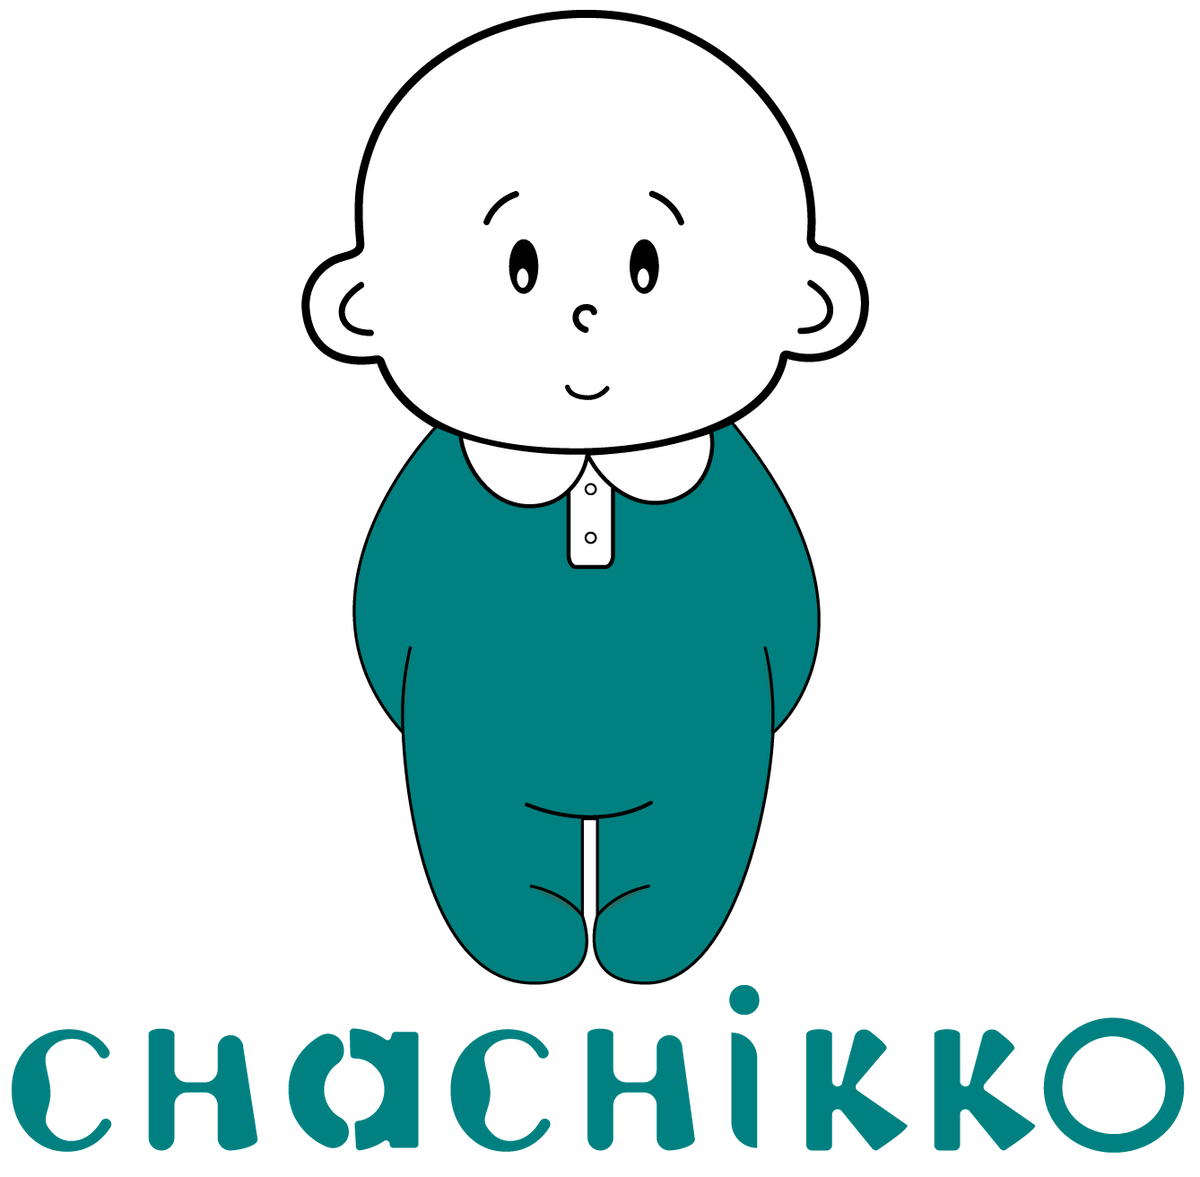 Chachikko